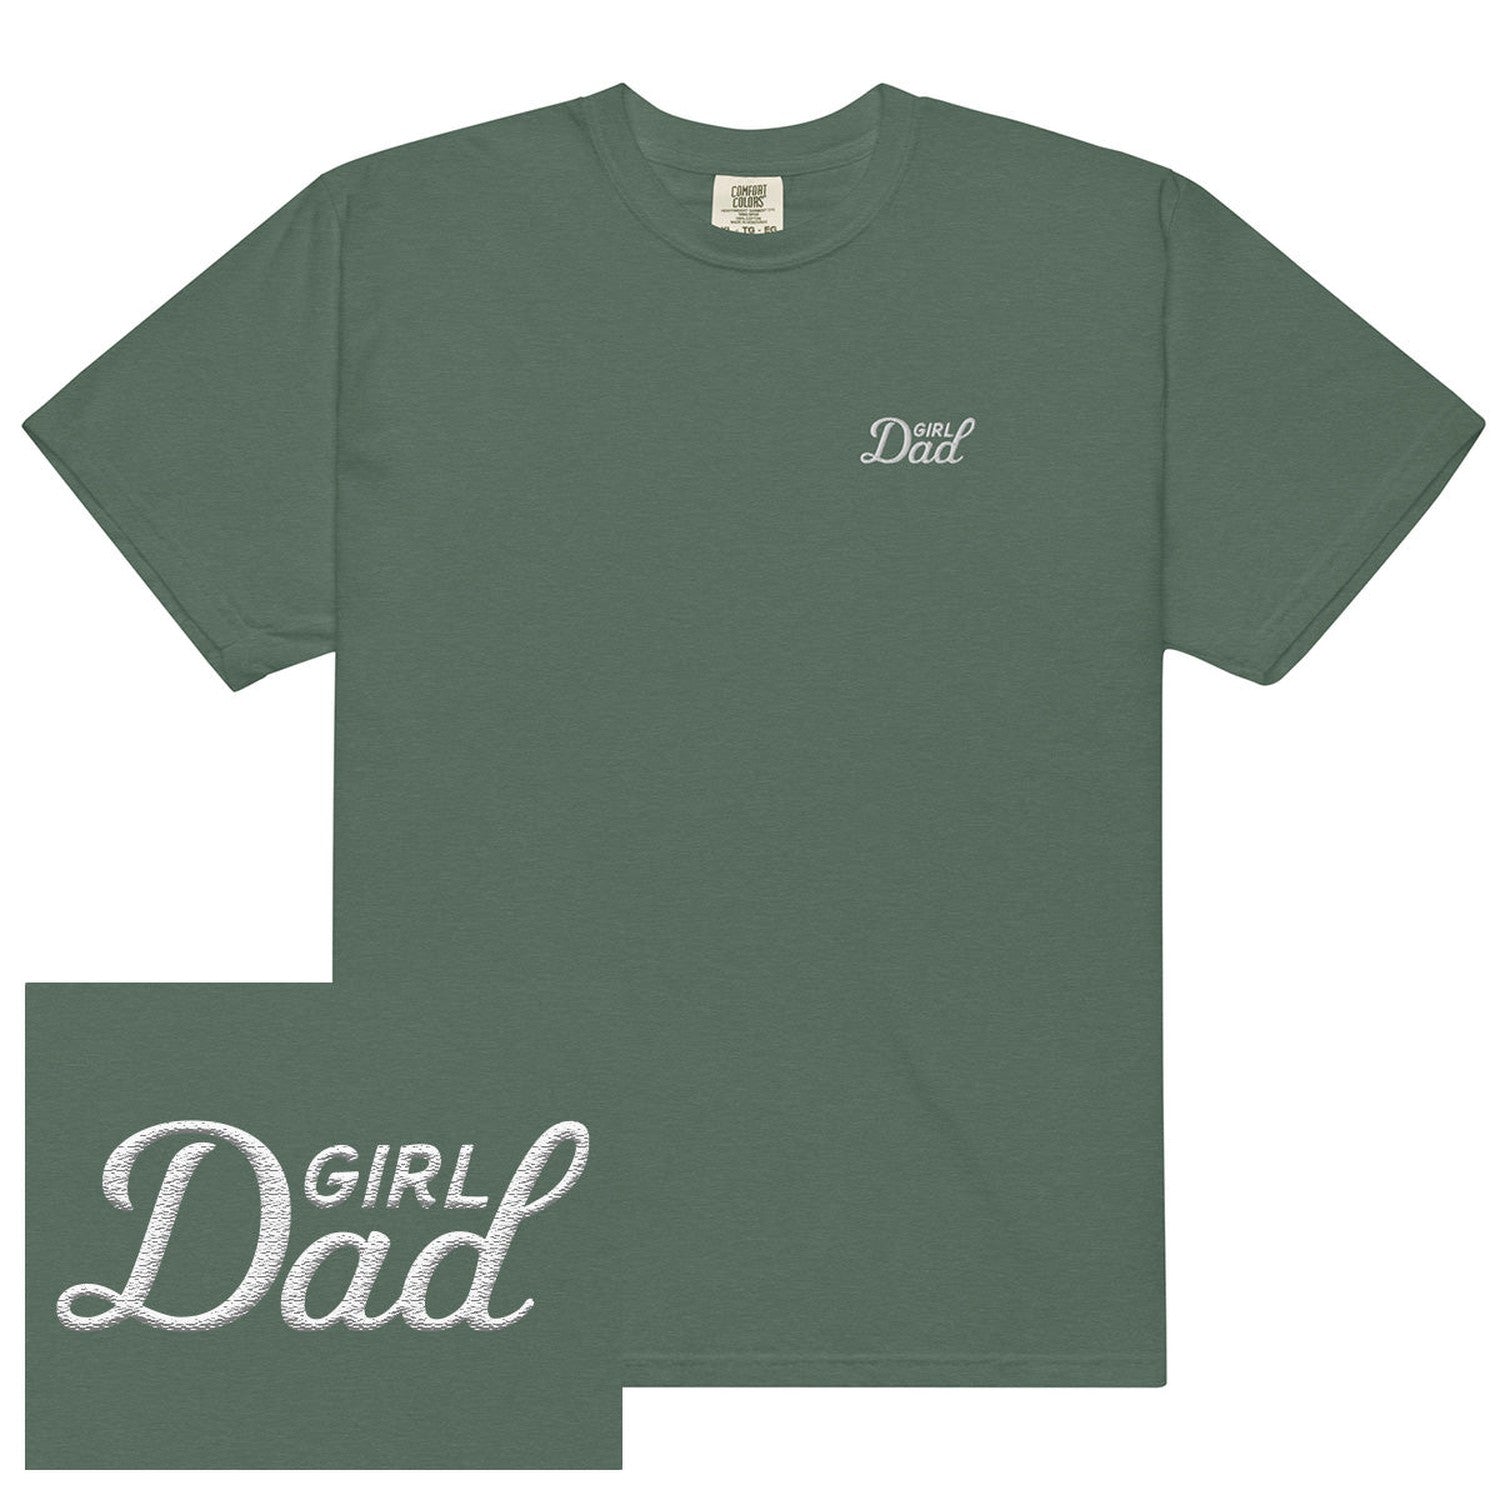 Girl Dad Embroidered Shirt